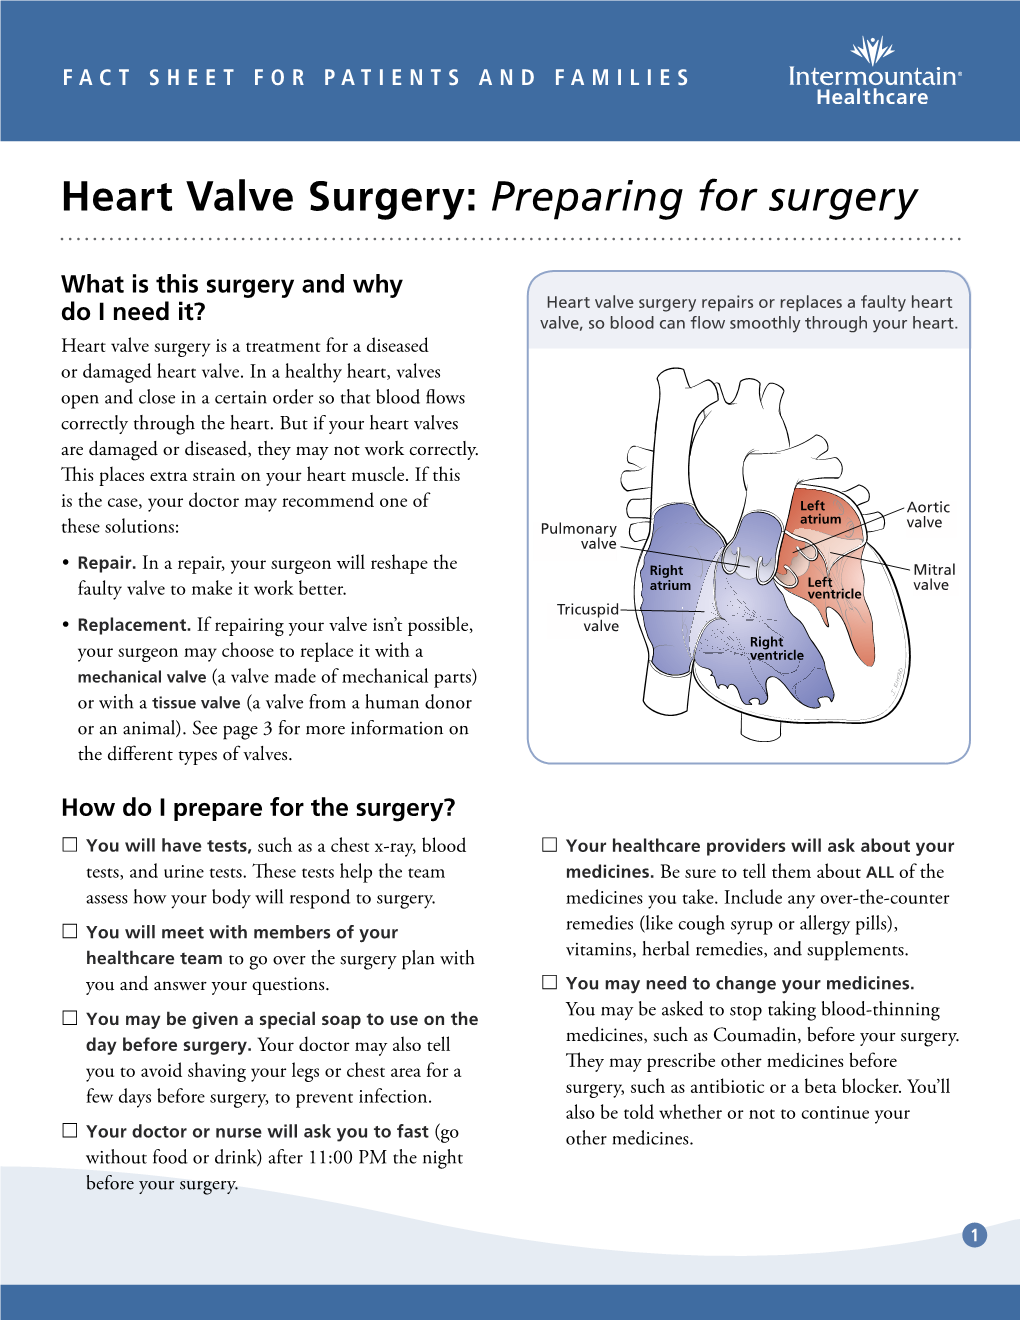 Heart Valve Surgery: Preparing for Surgery